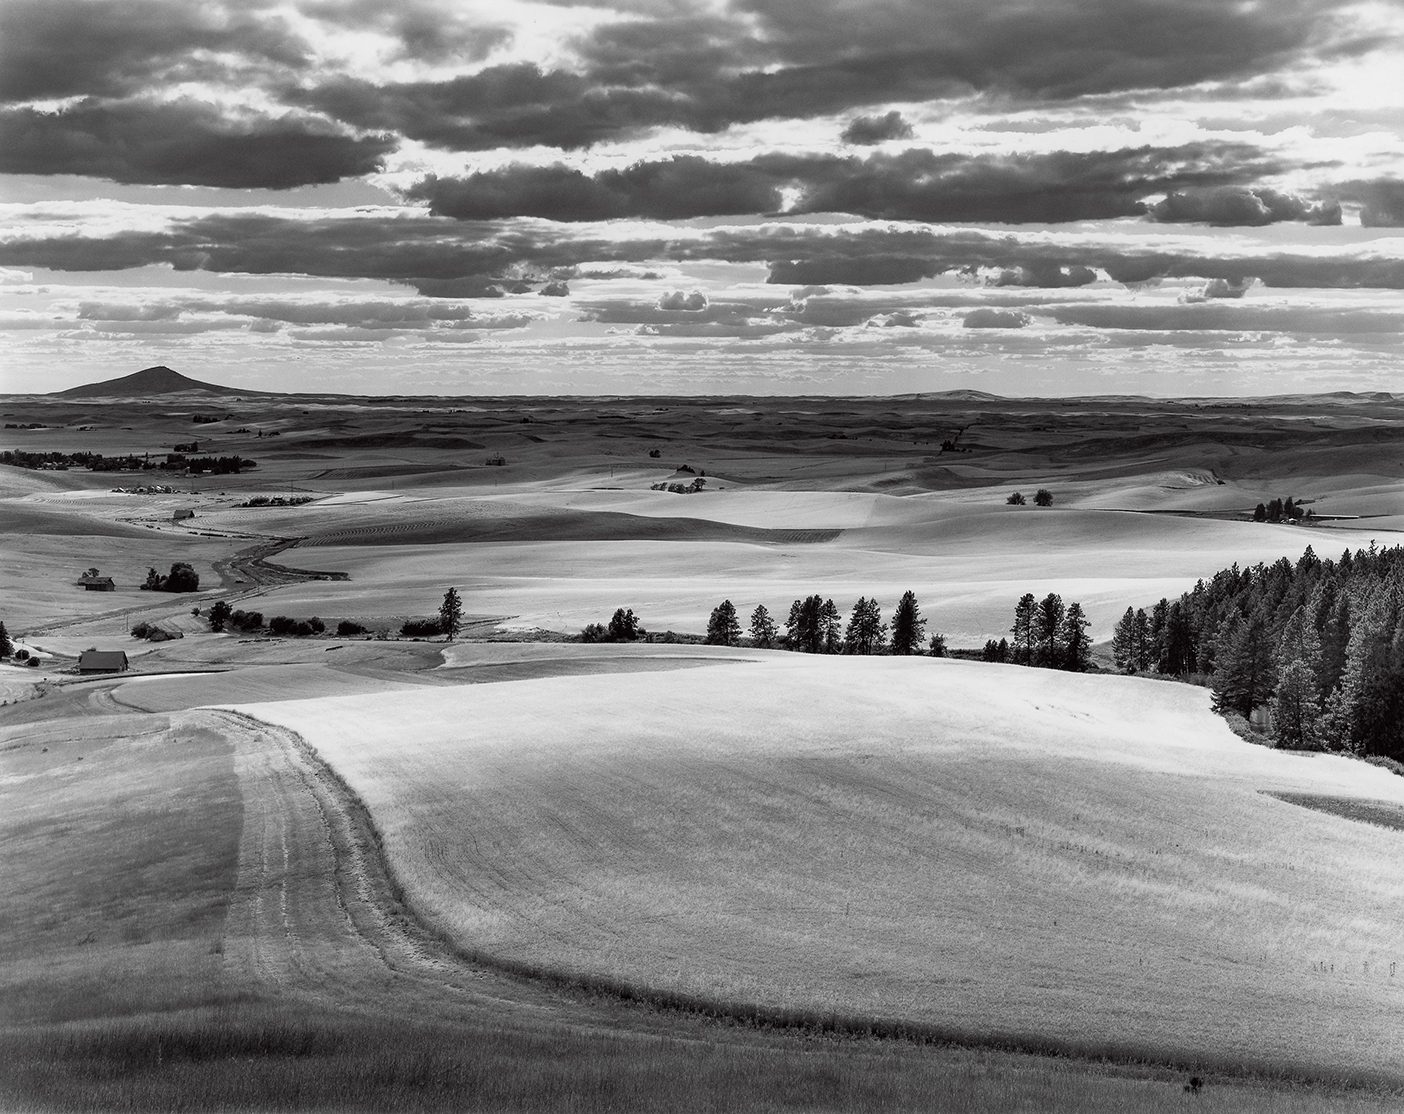 A large black and white image of the vast Palouse landscape.